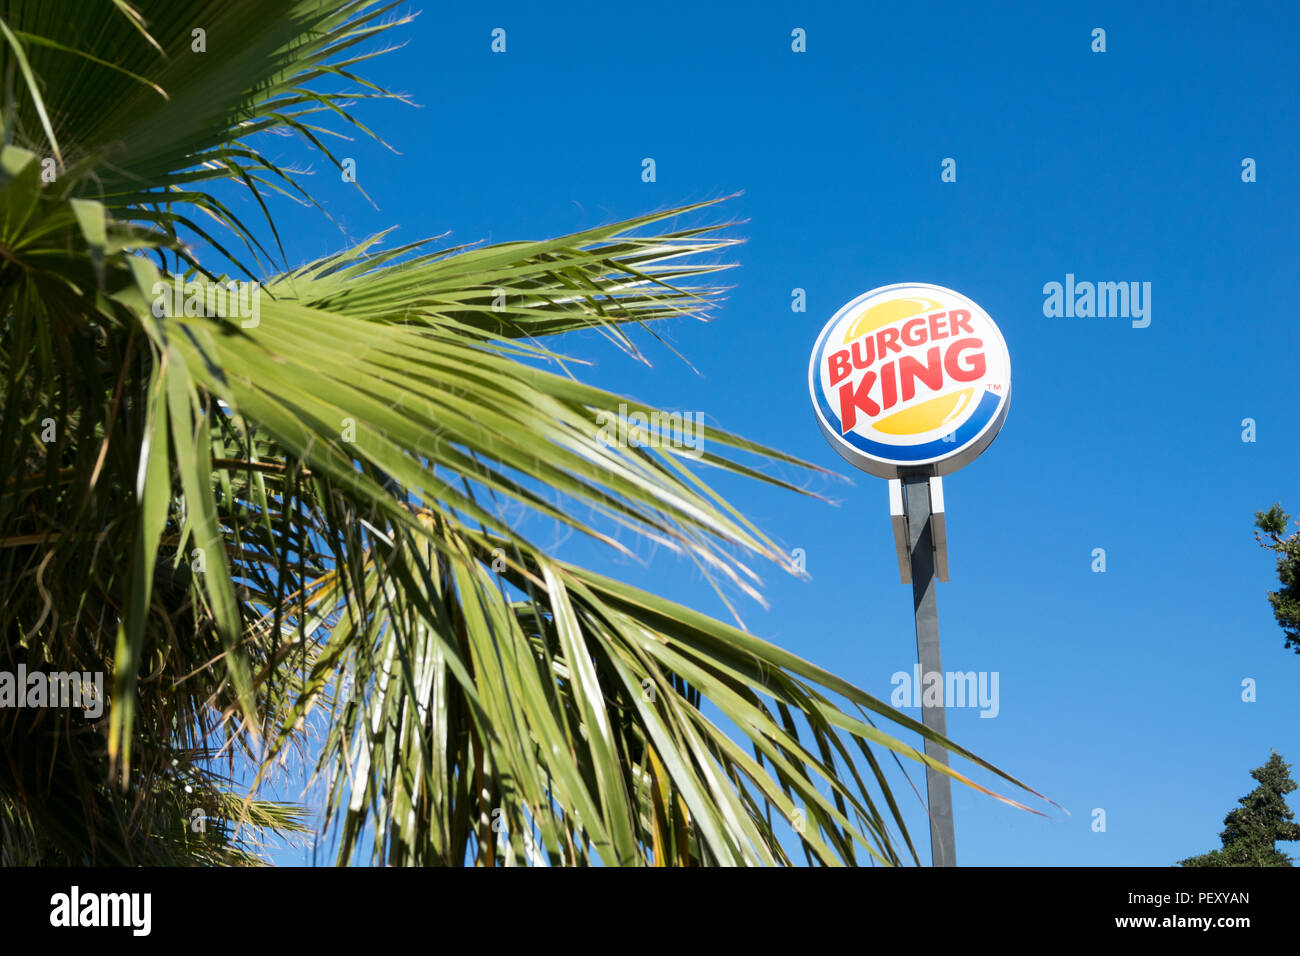 Burger King sign in ibiza Stock Photo